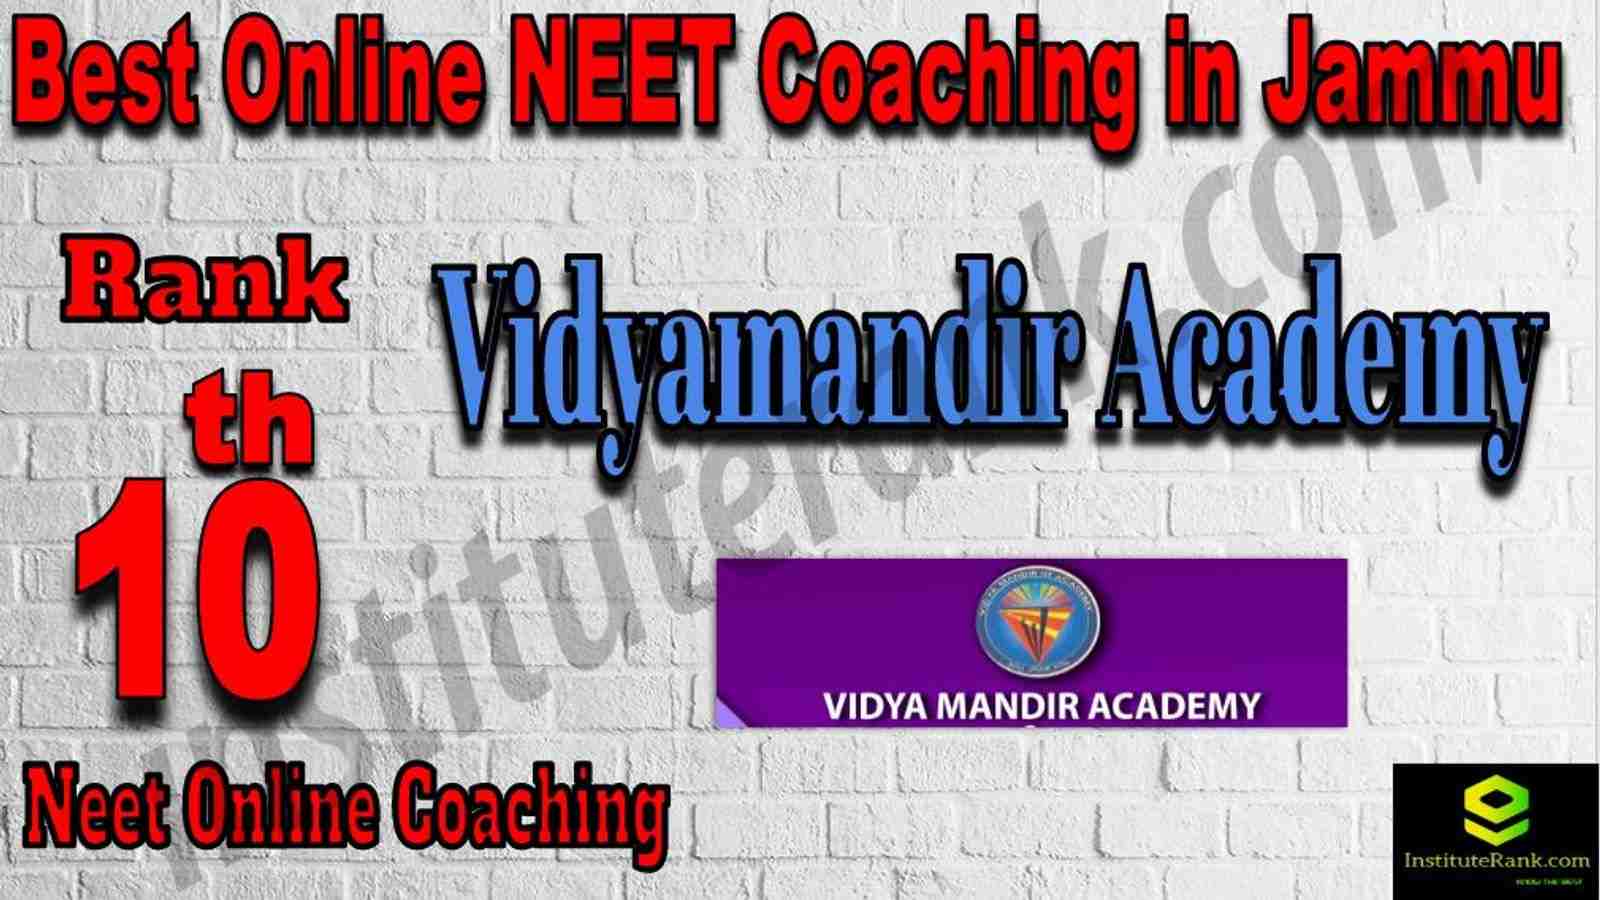 10th Best Online Neet Coaching in Jammu